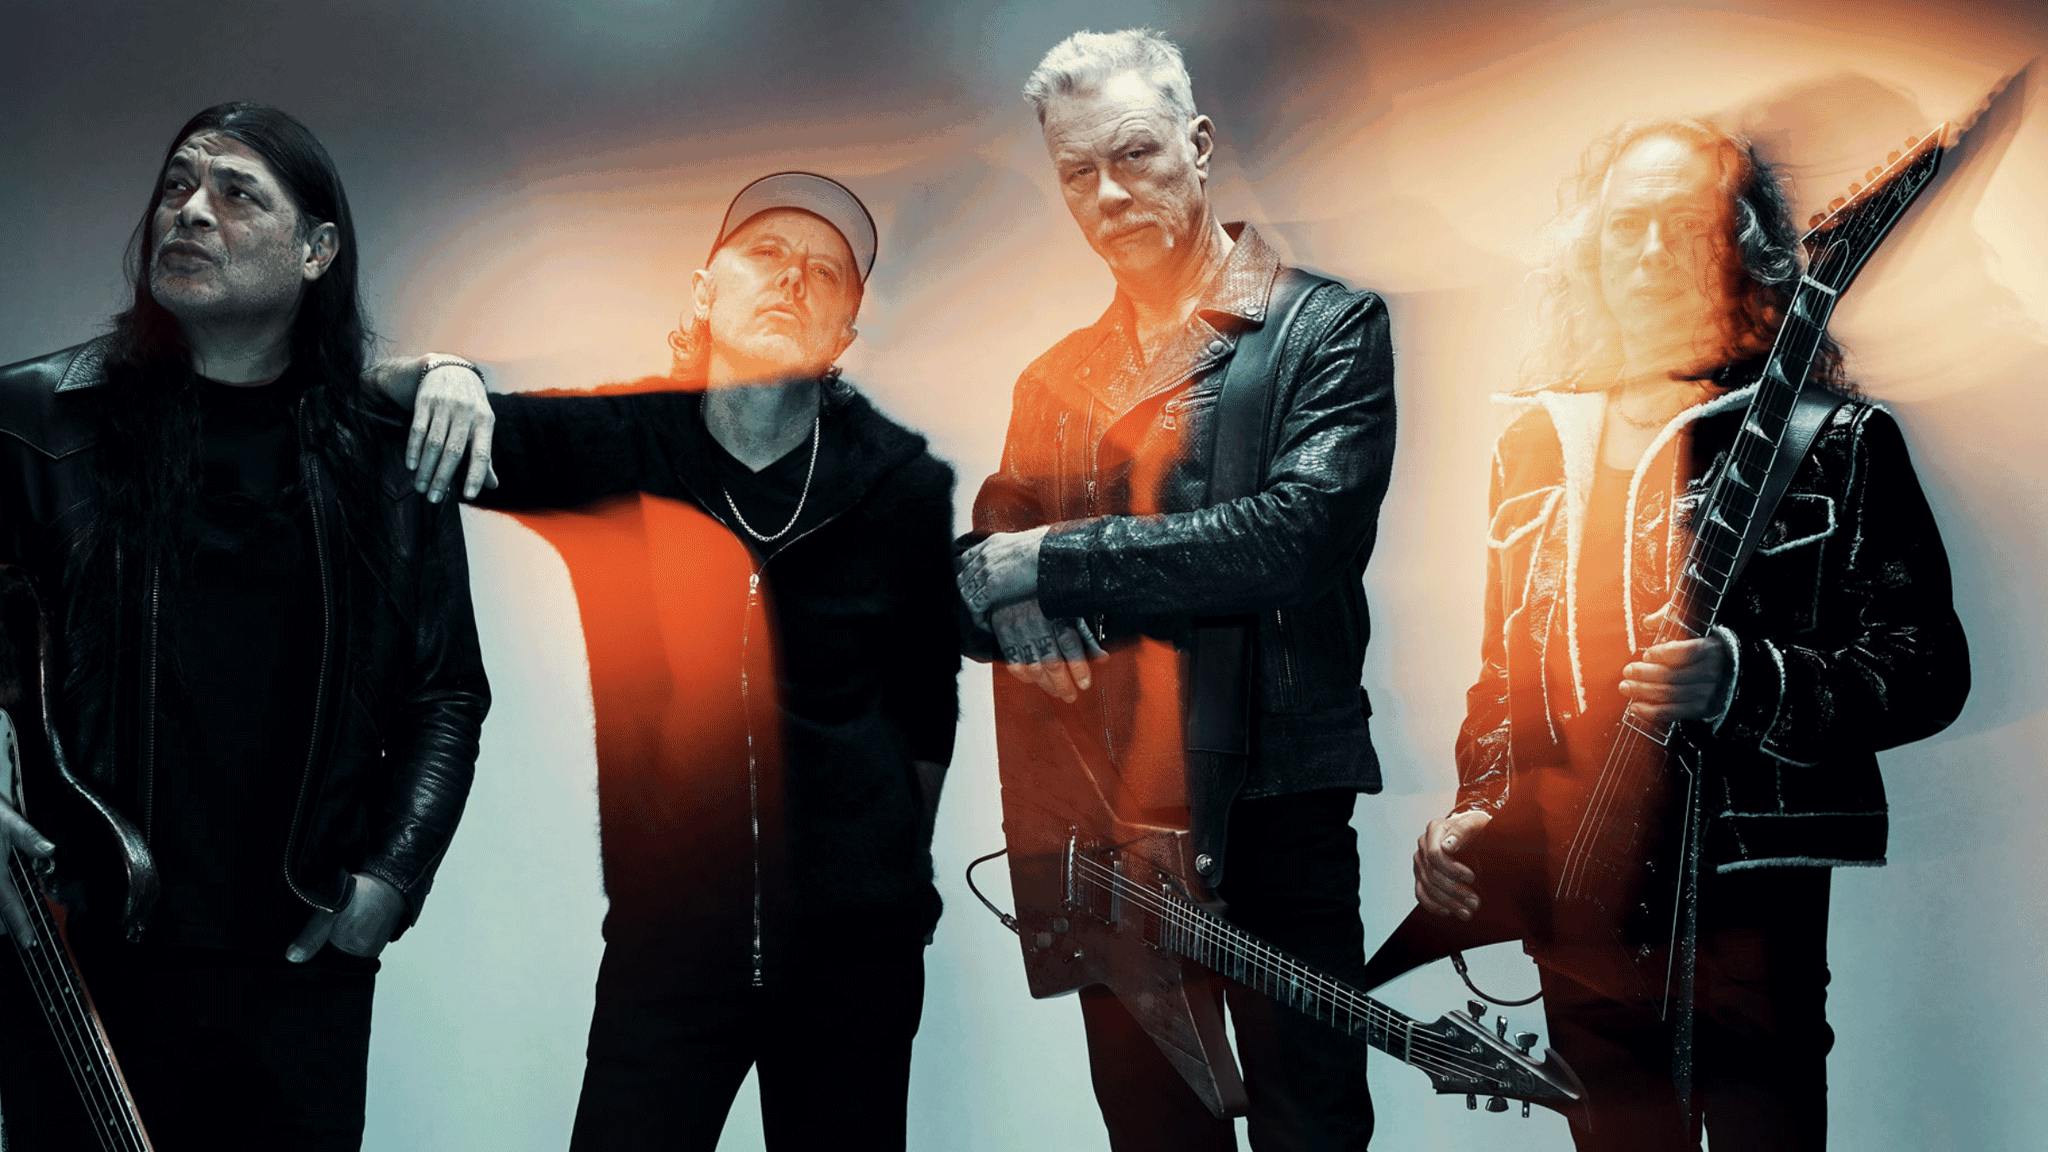 Metallica reschedule show after James Hetfield tests positive for COVID